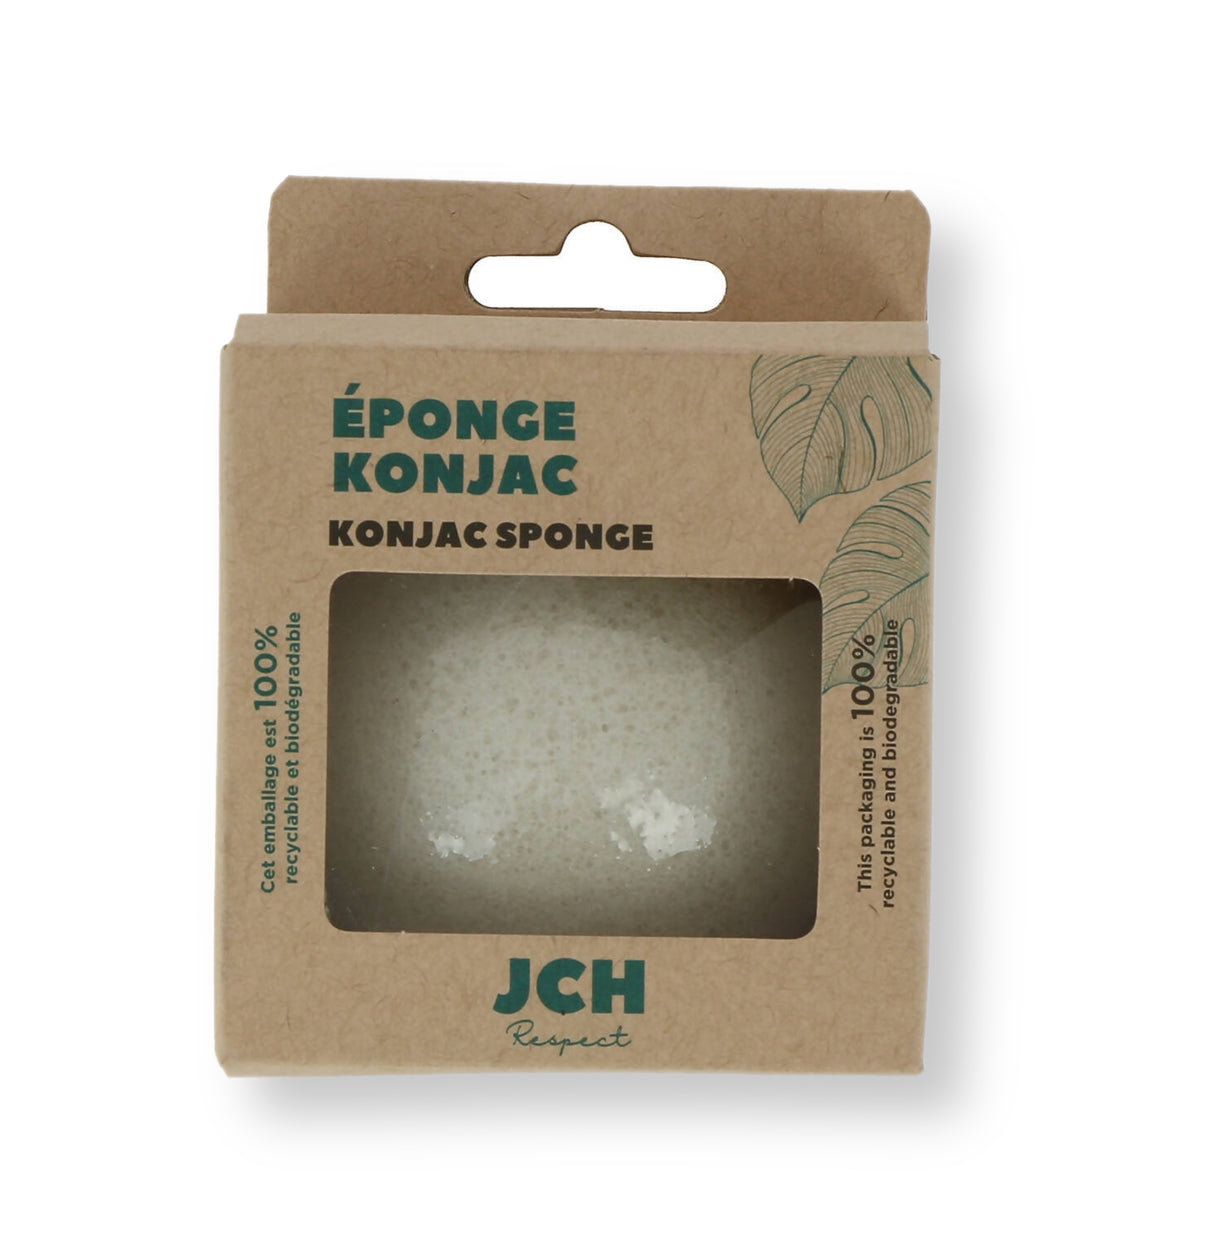 100% Natural Konjac Sponge for all Skin Types